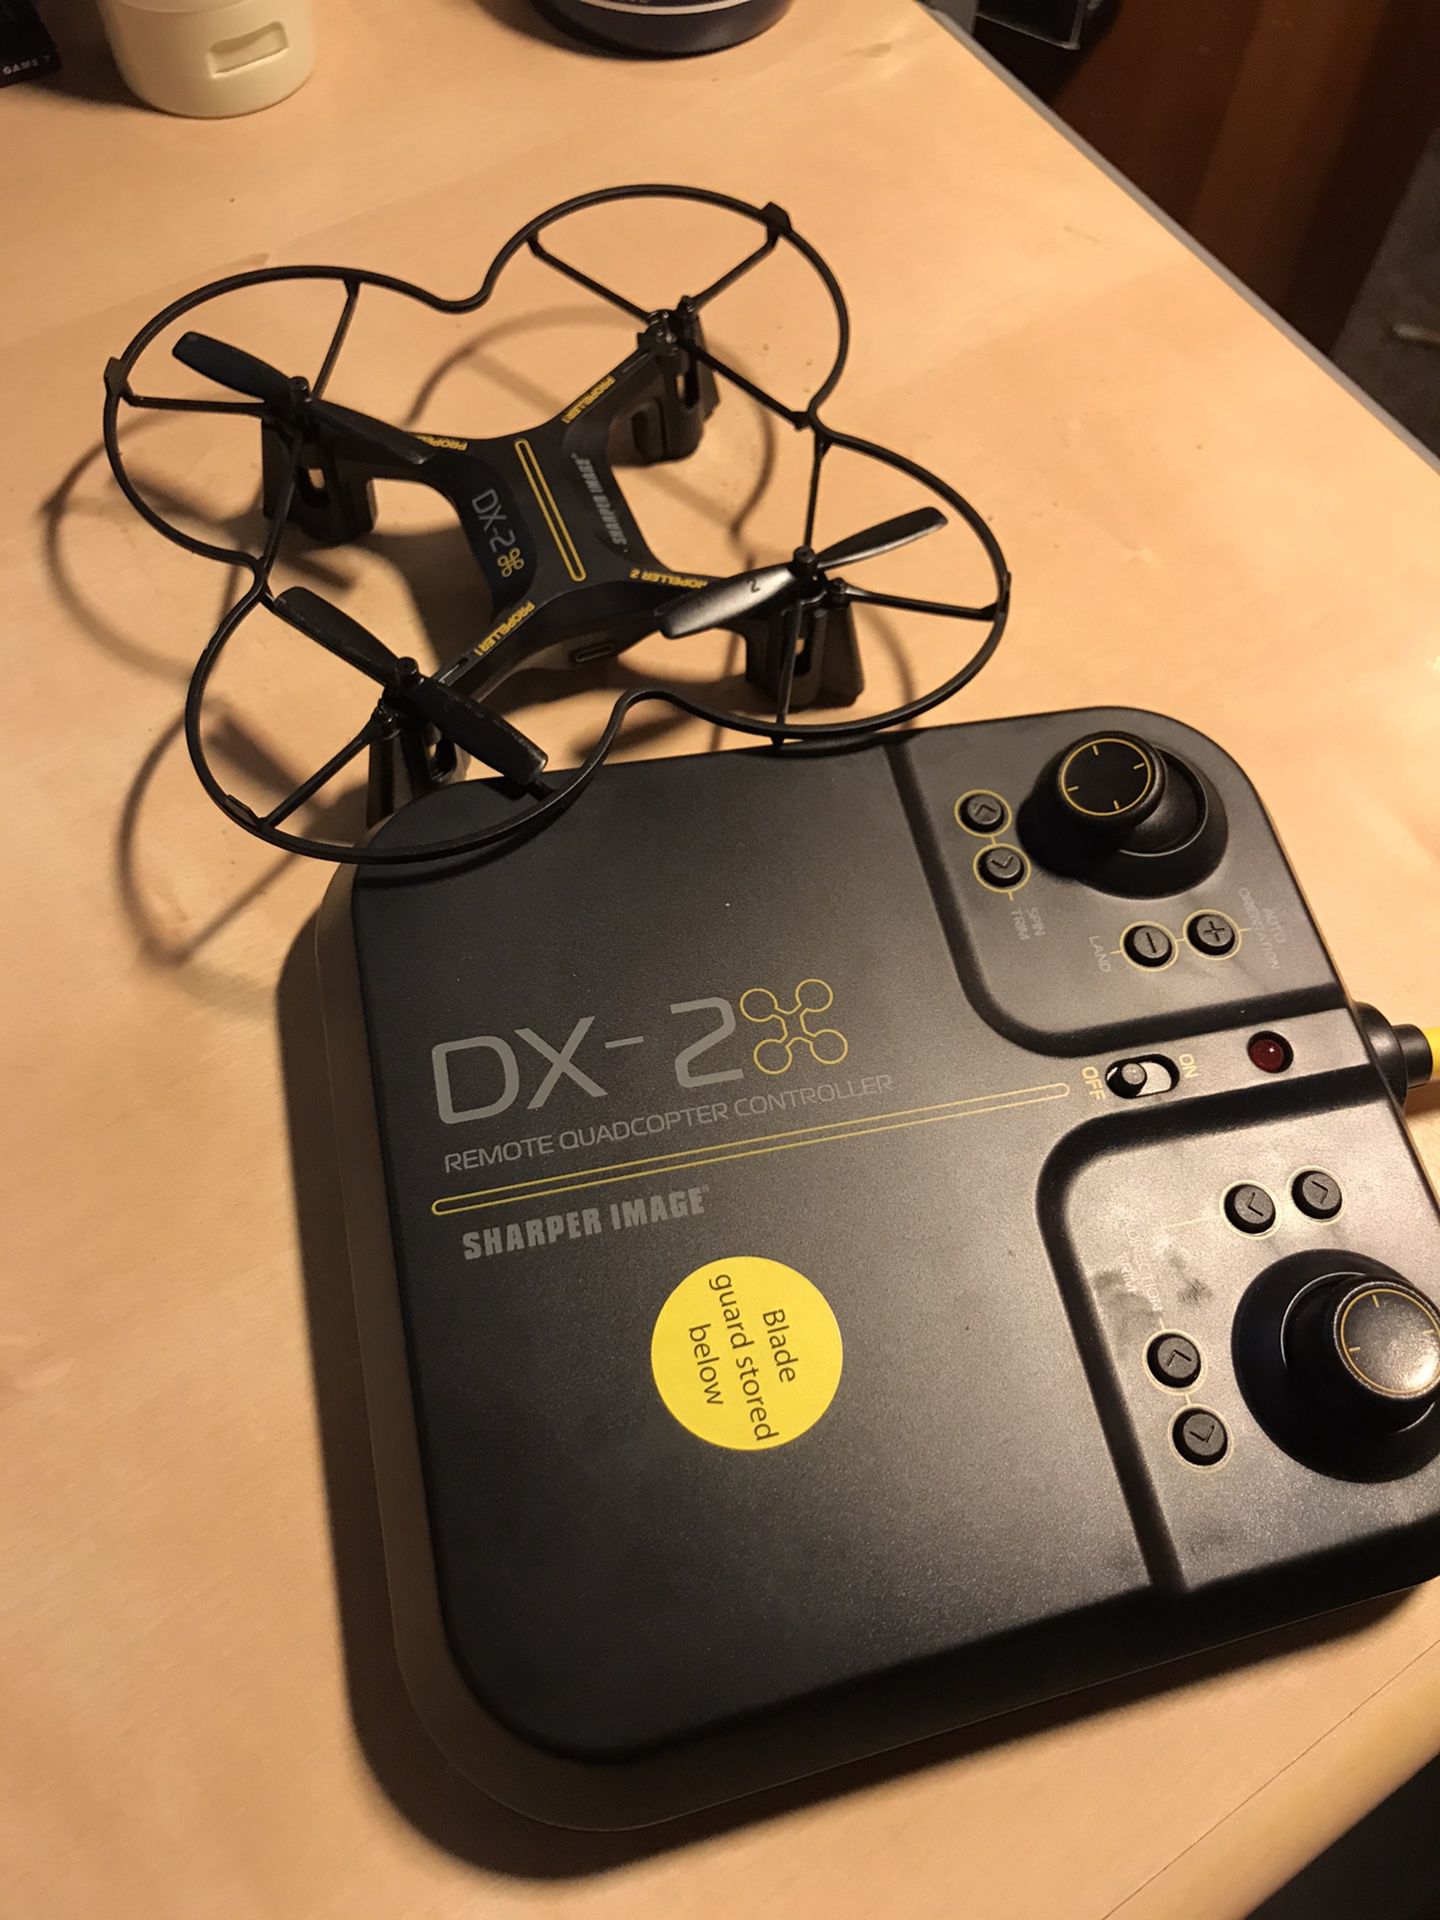 Remote control Drone - DX -2